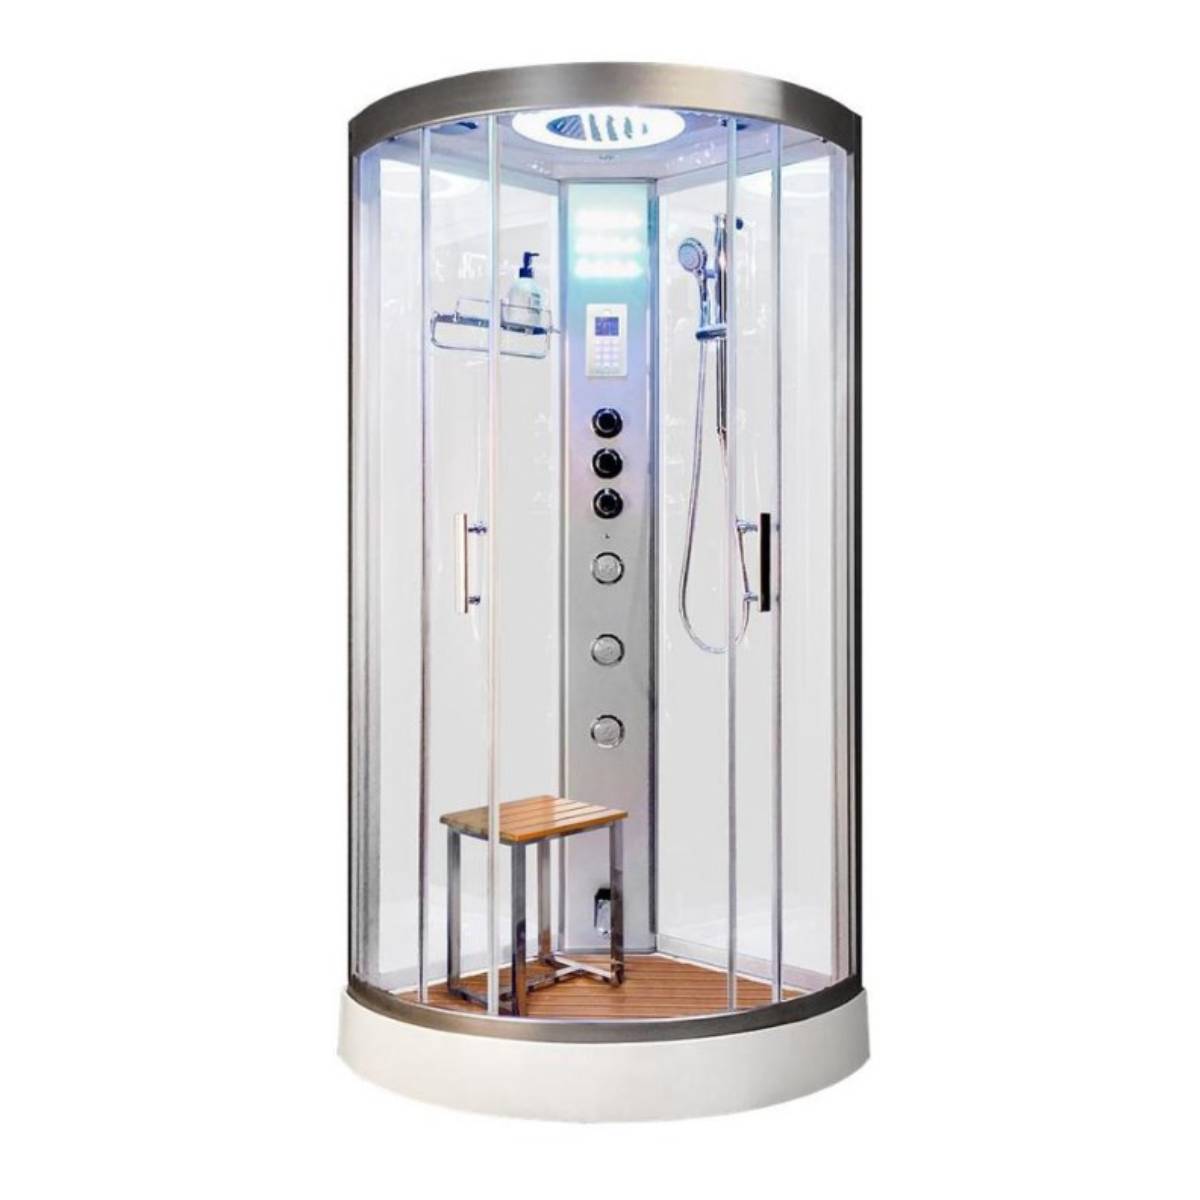 Vidalux Essence 900mm Steam Shower Enclosure - White (11504)